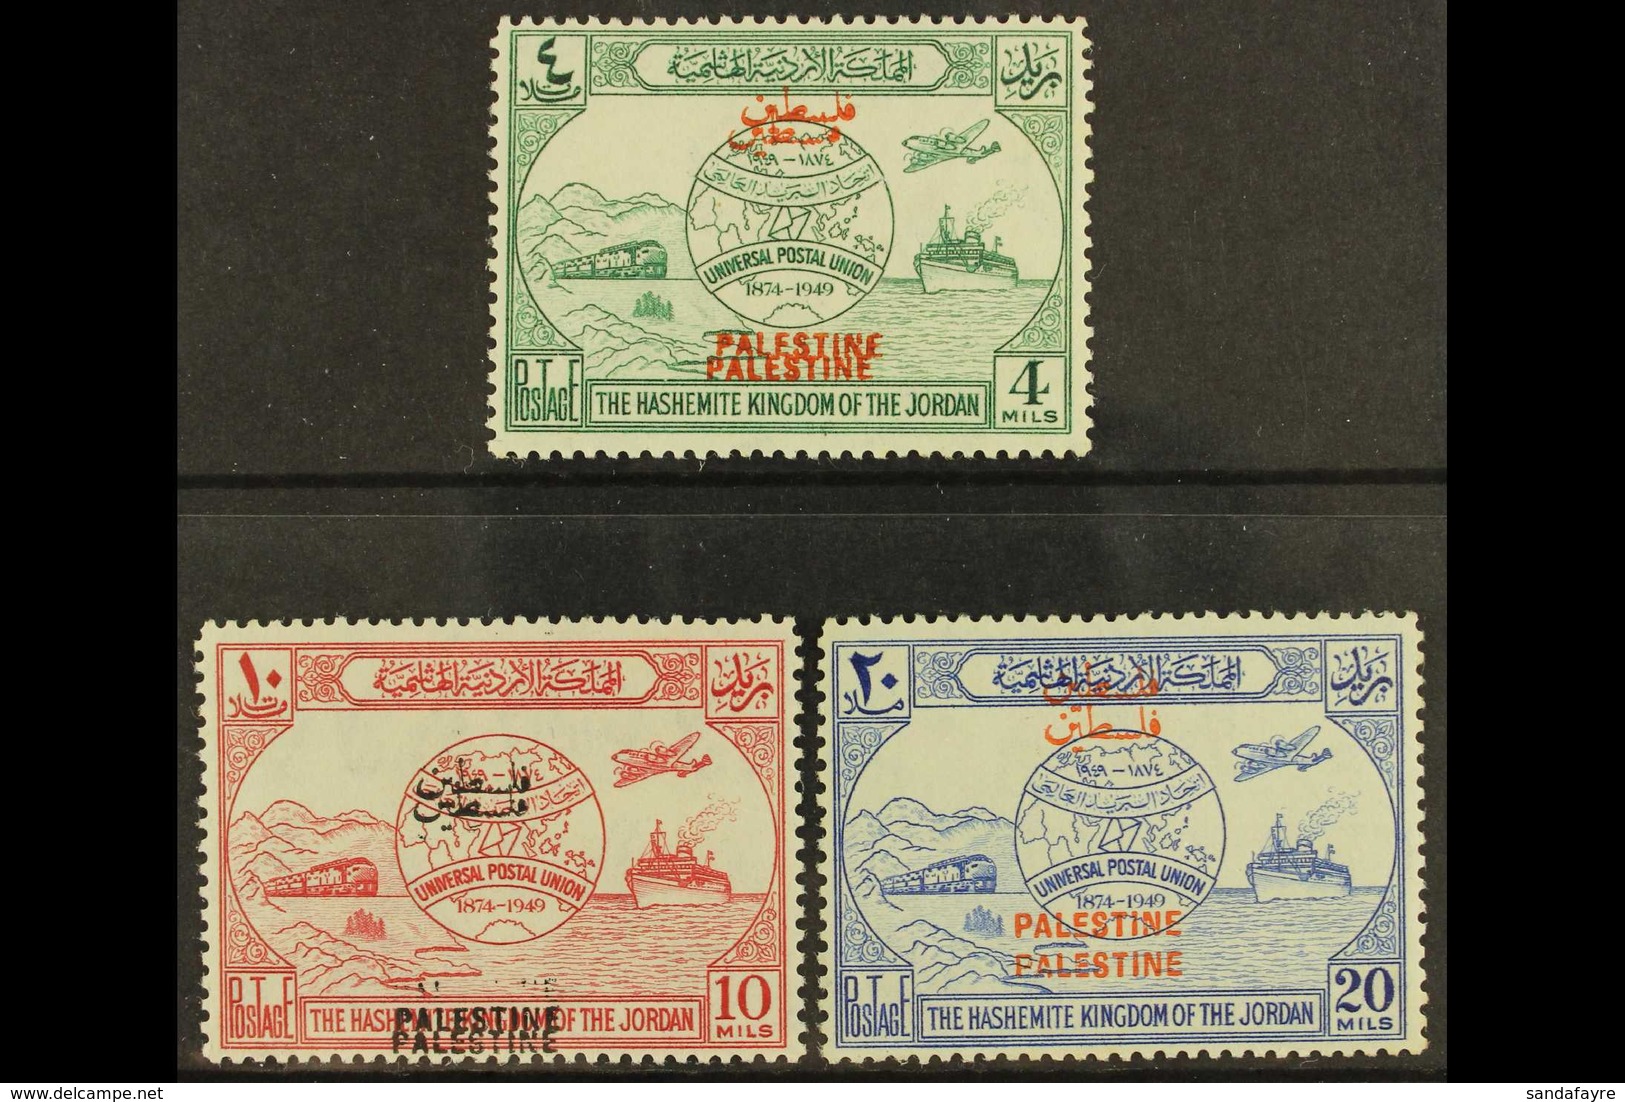 JORDAN OCCUPATION 1949 4m Green, 10m Carmine And 20m Blue UPU All Three Stamps With DOUBLE OVERPRINTS, SG P31c, P32b & P - Palästina